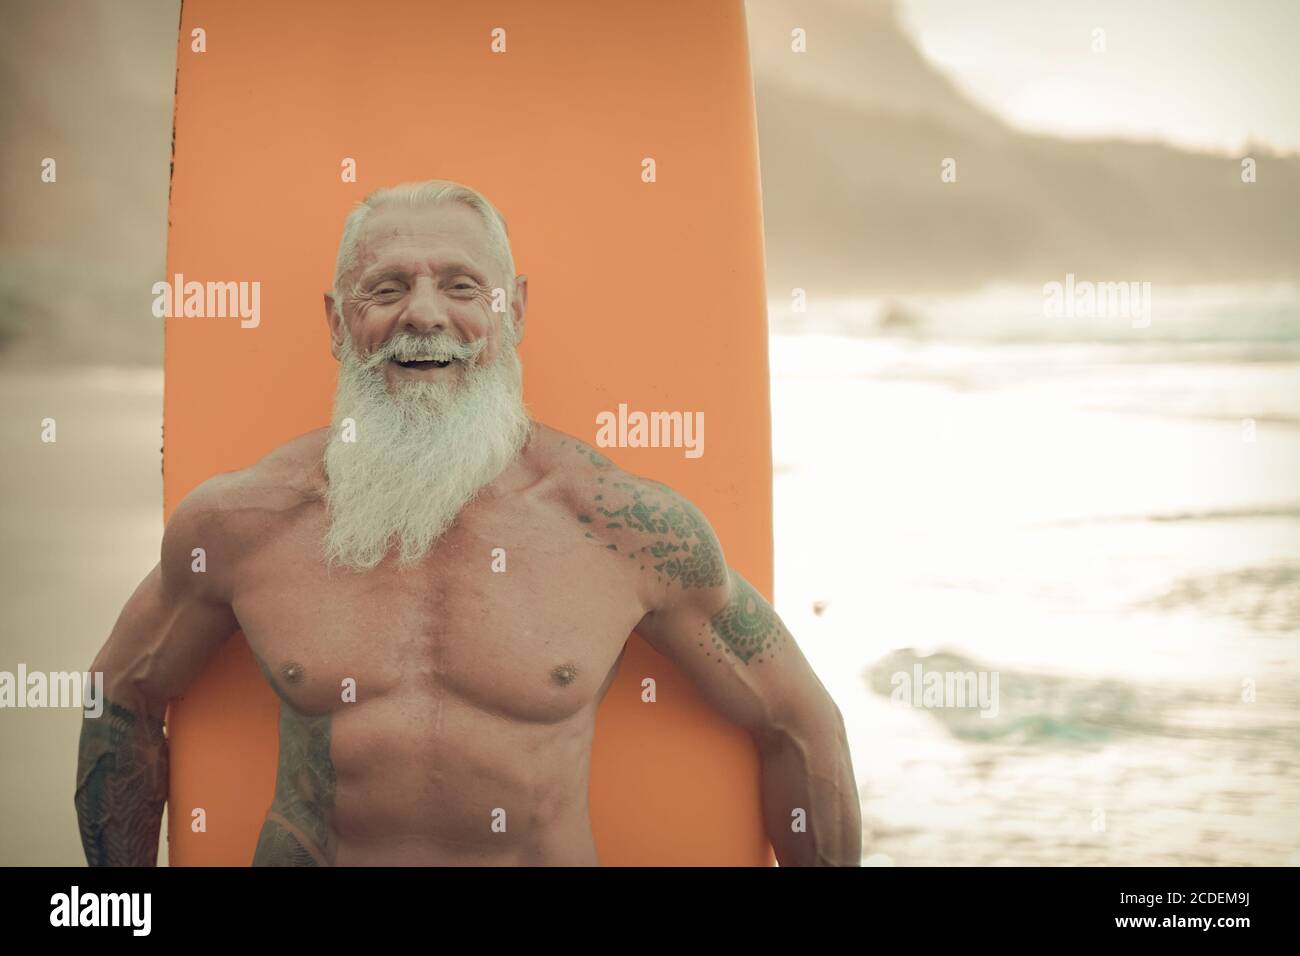 Senior man with orange longboard. Happy old guy having fun doing extreme sport. Joyful elderly concept - Image Stock Photo